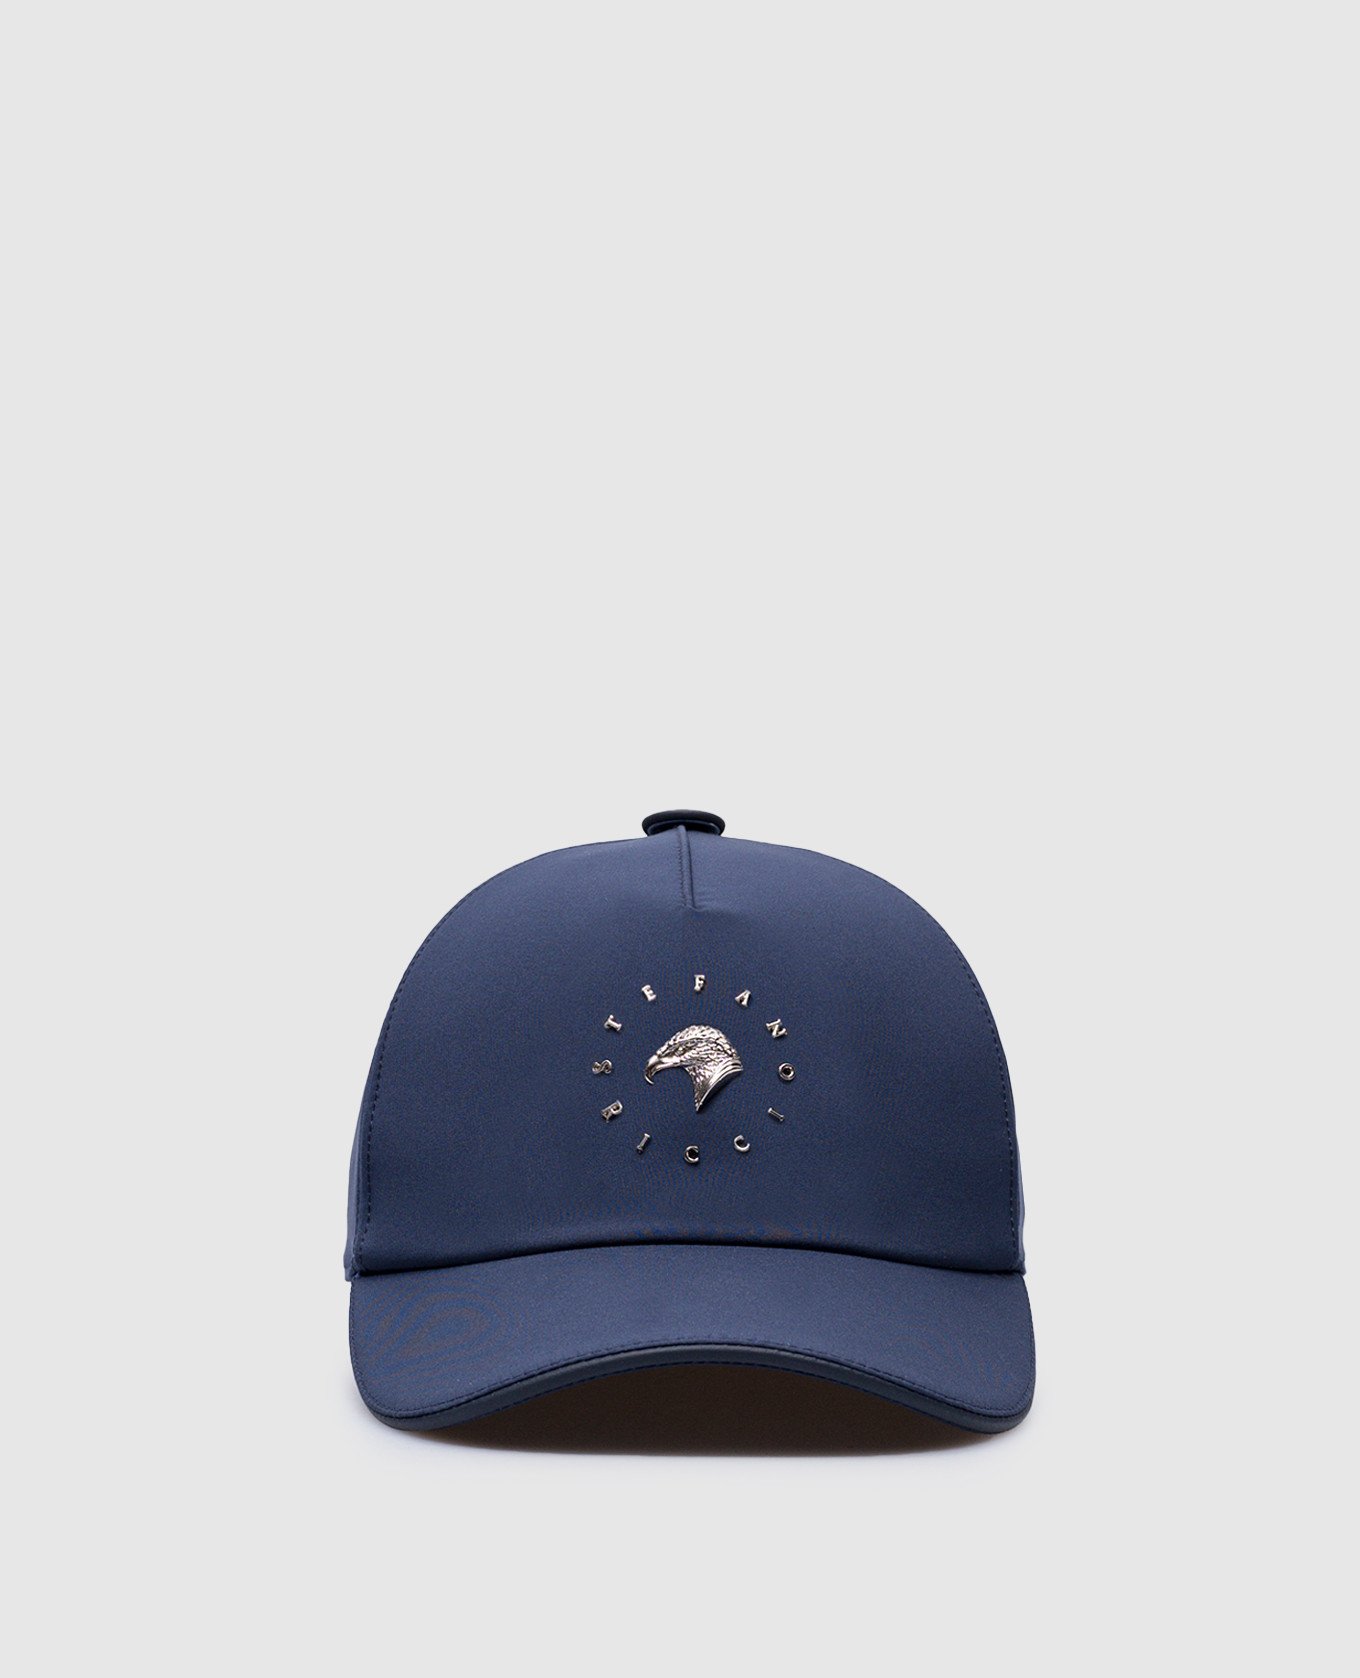 Blue cap with metal logo